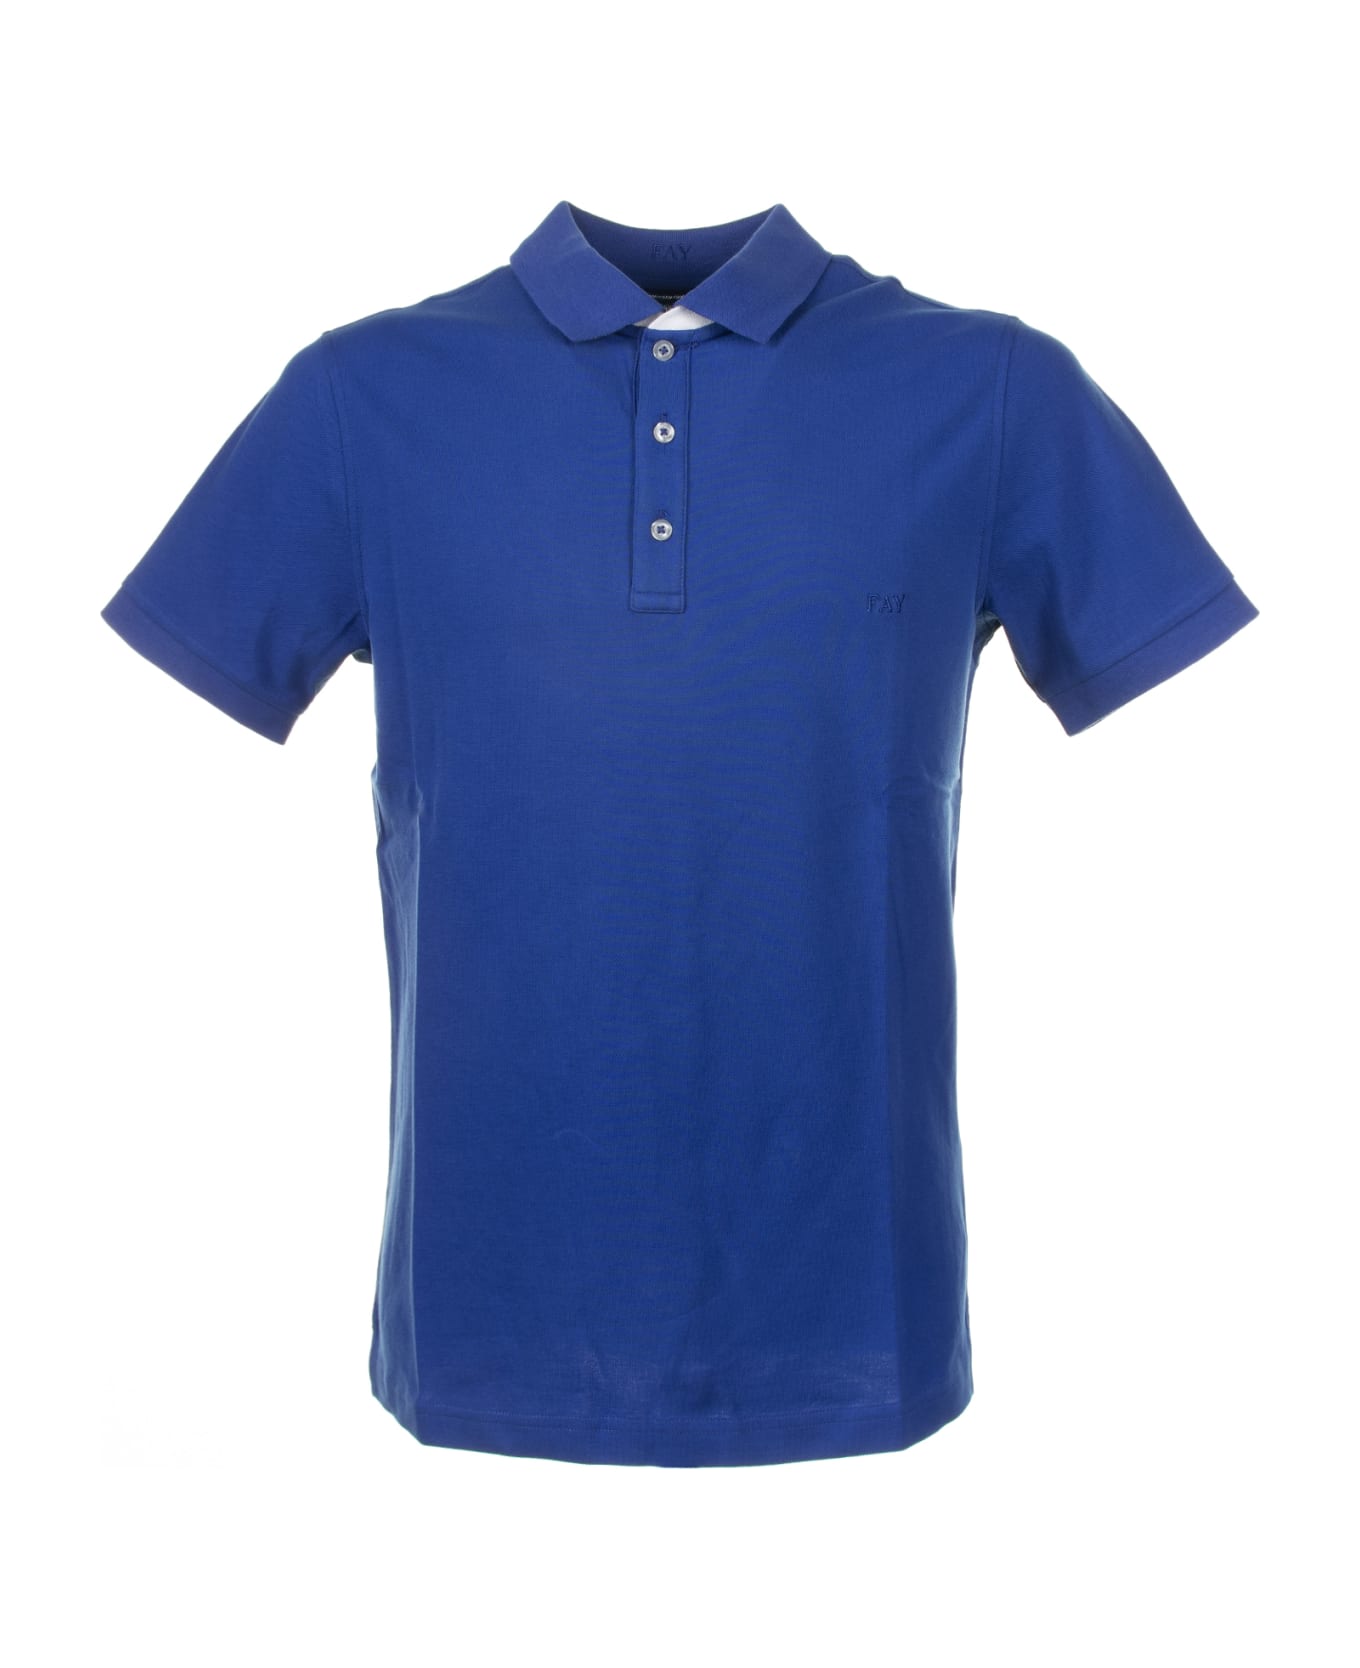 Fay Electric Blue Short-sleeved felpa Polo Shirt - BLU ELETTRICO